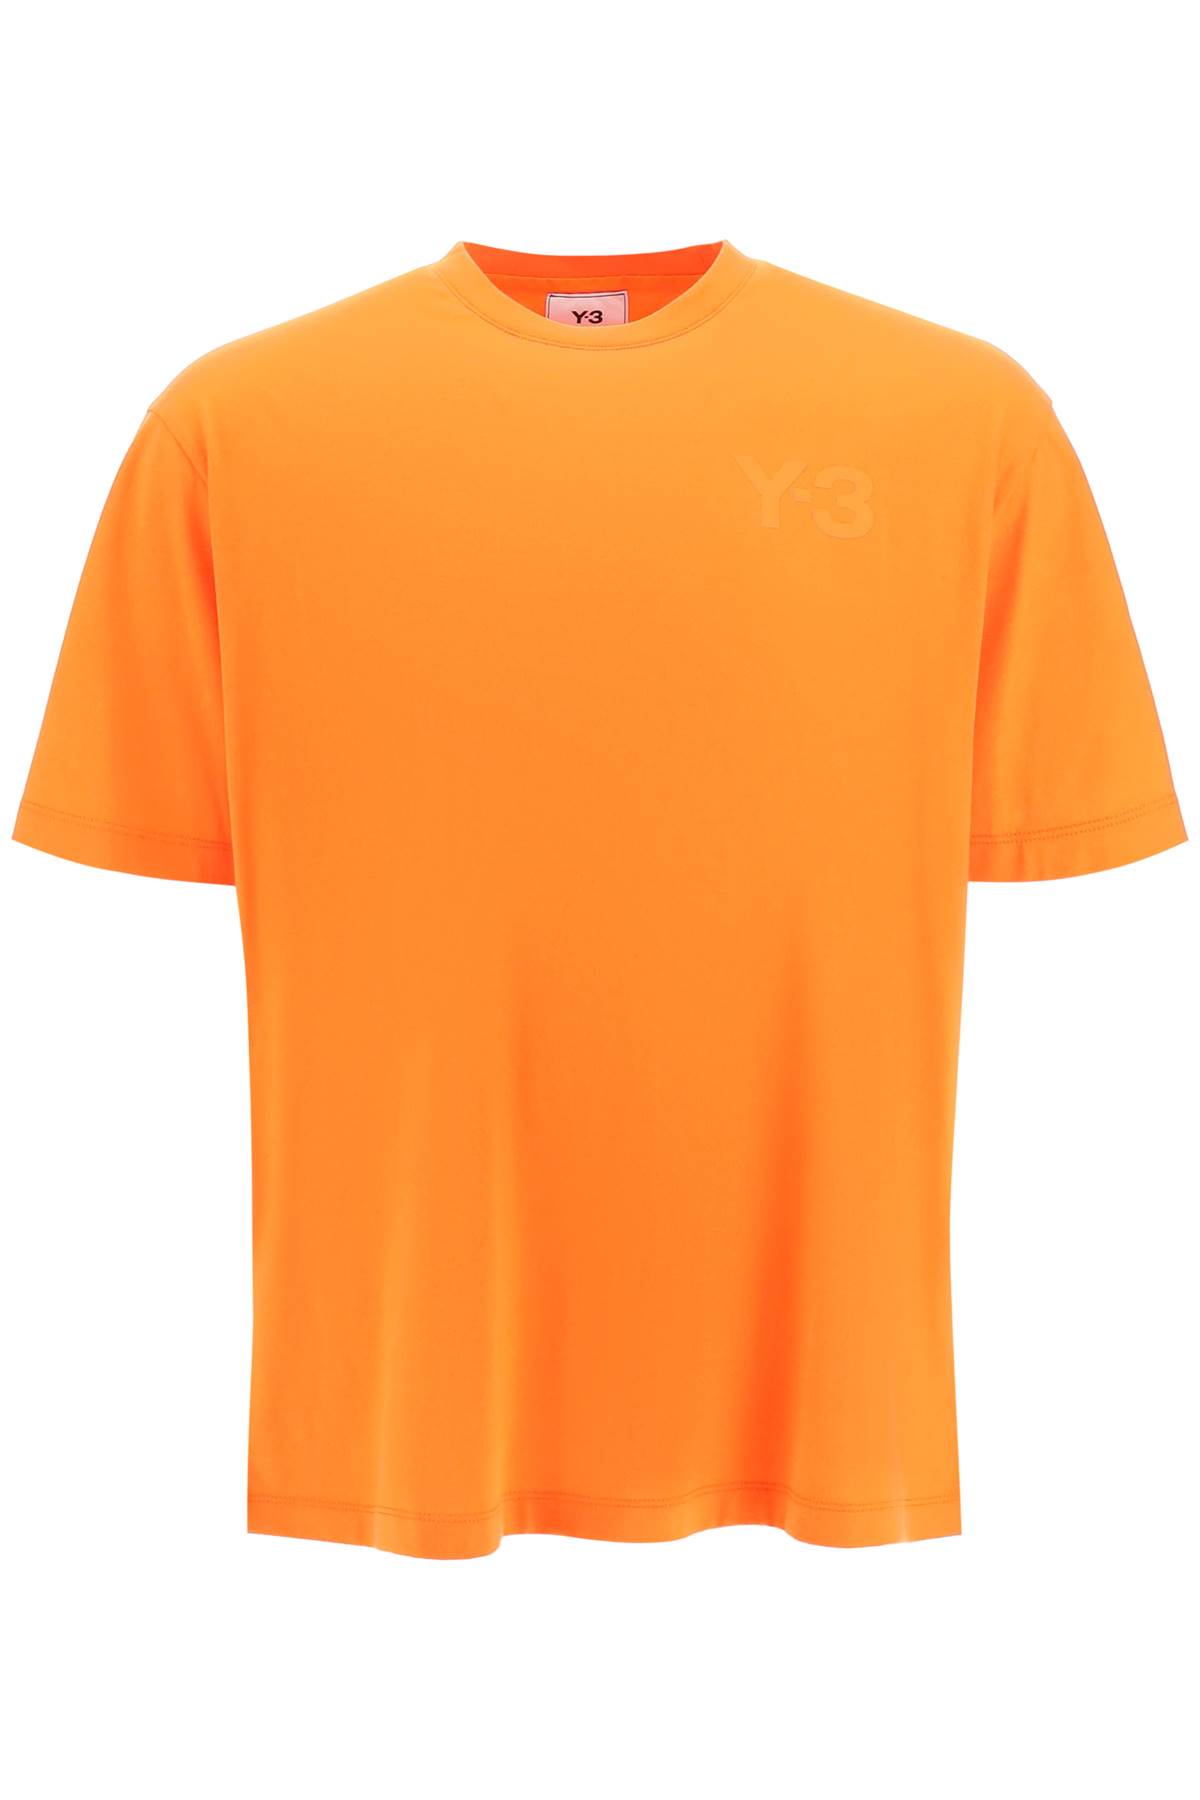 Y-3 Logo Cotton Short-sleeved T-shirt